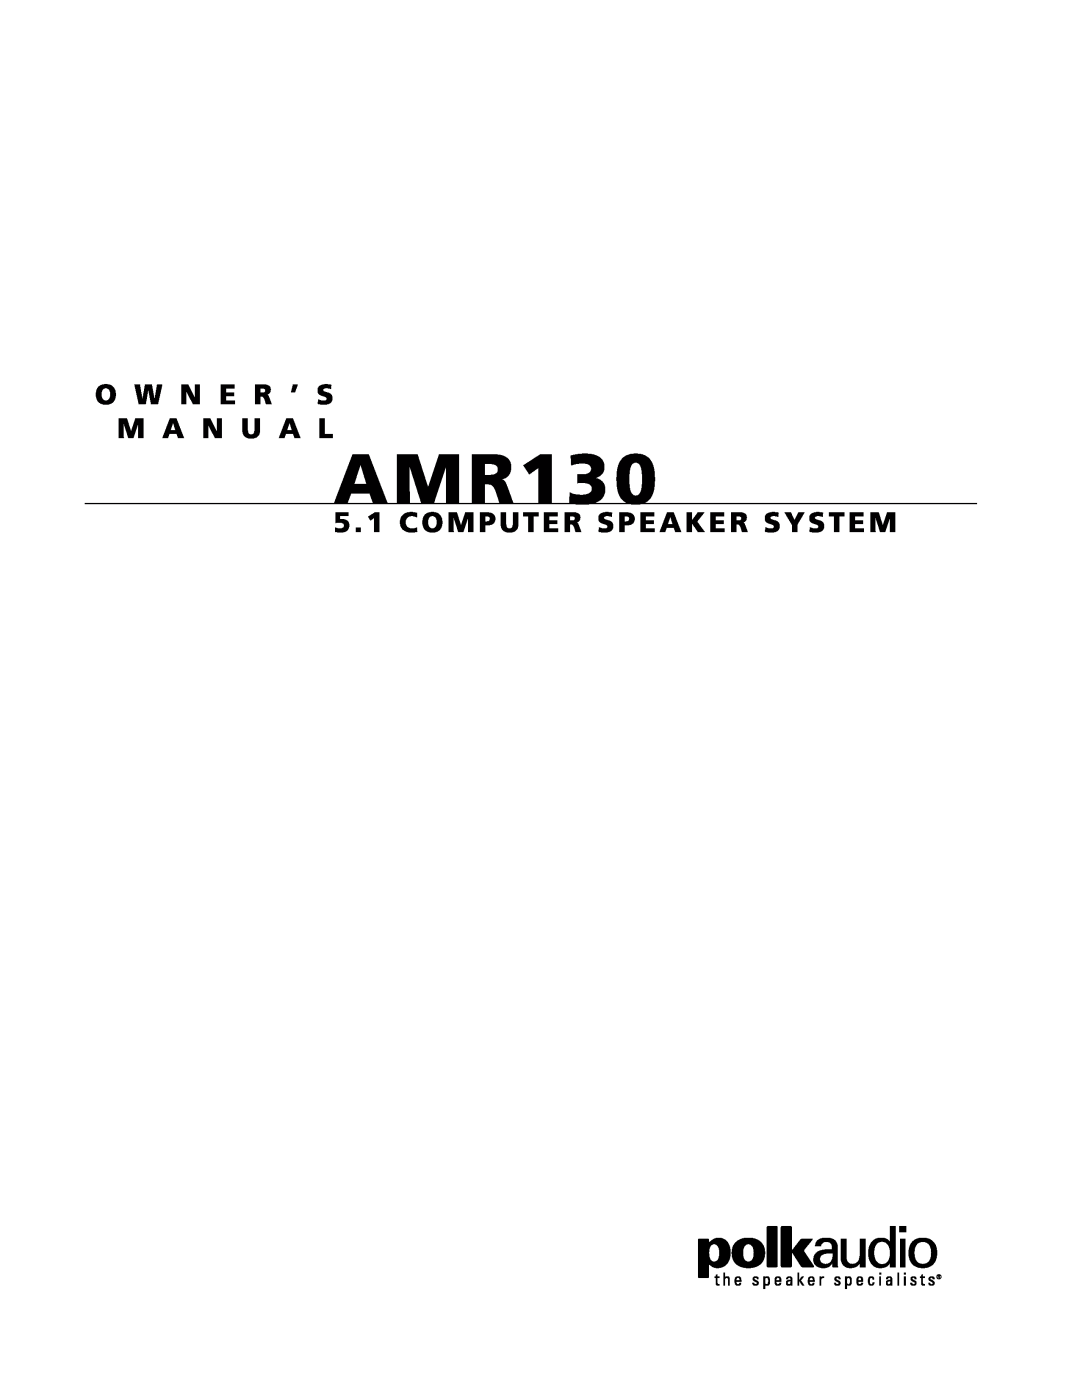 Polk Audio AMR 130 owner manual AMR130, O W N E R ’ S M A N U A L, 5 . 1 COMPUTER SPEAKER SYSTEM 